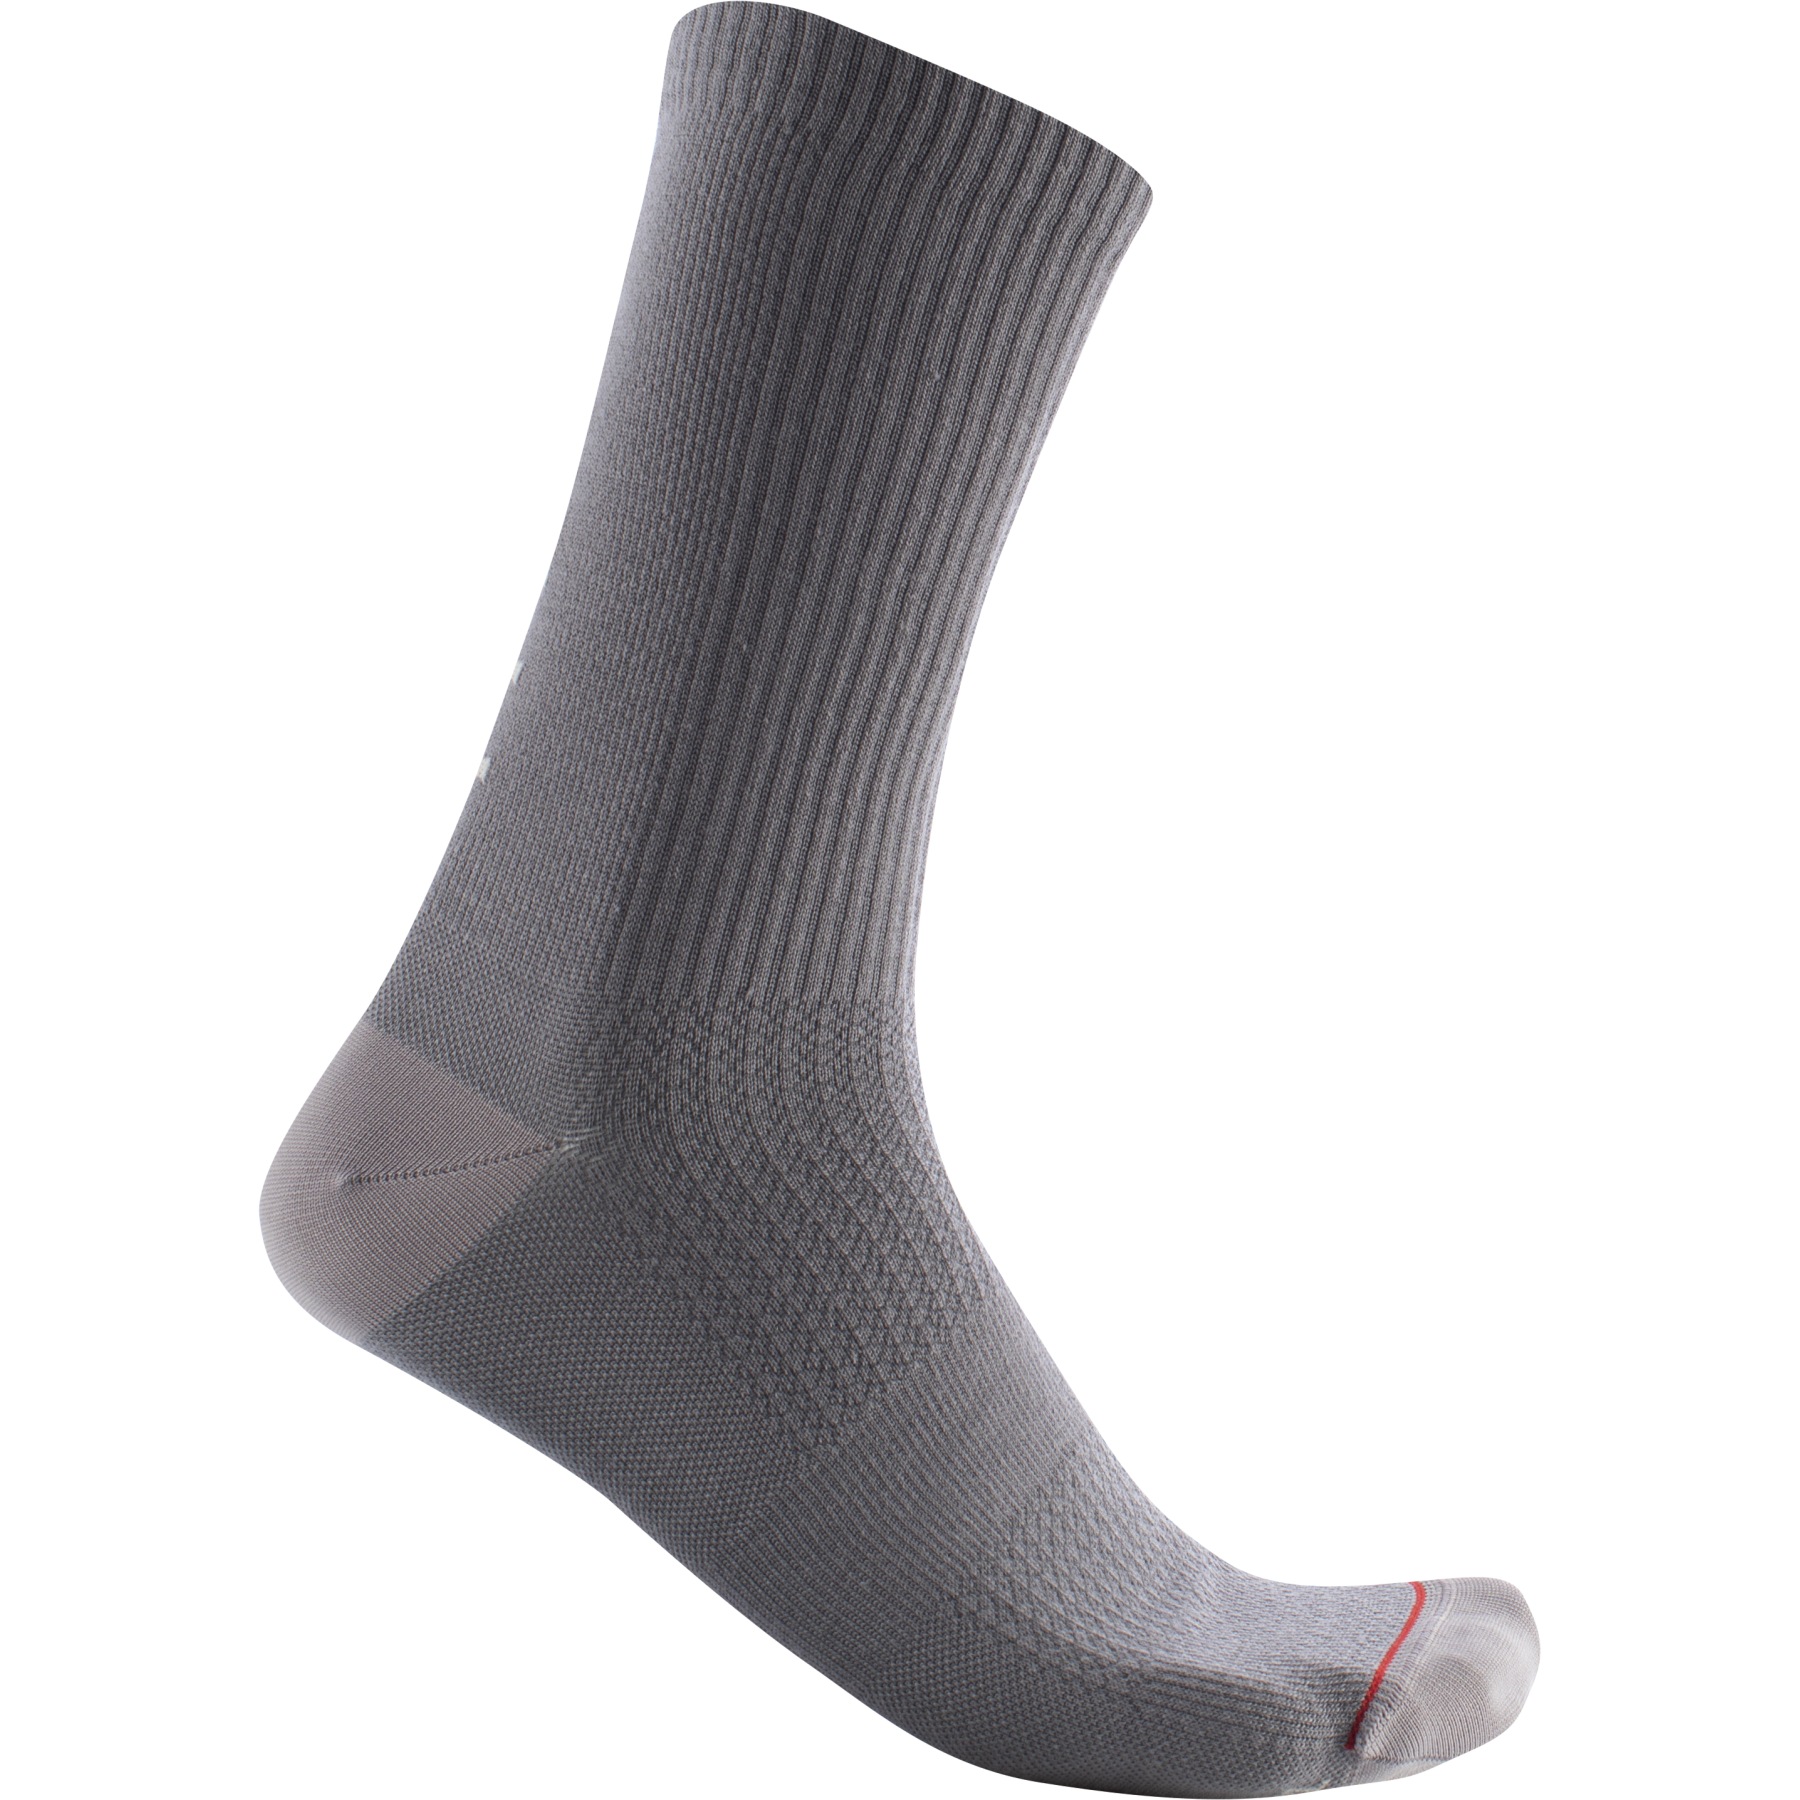 Picture of Castelli Bandito Wool 18 Socks - nickel grey 064